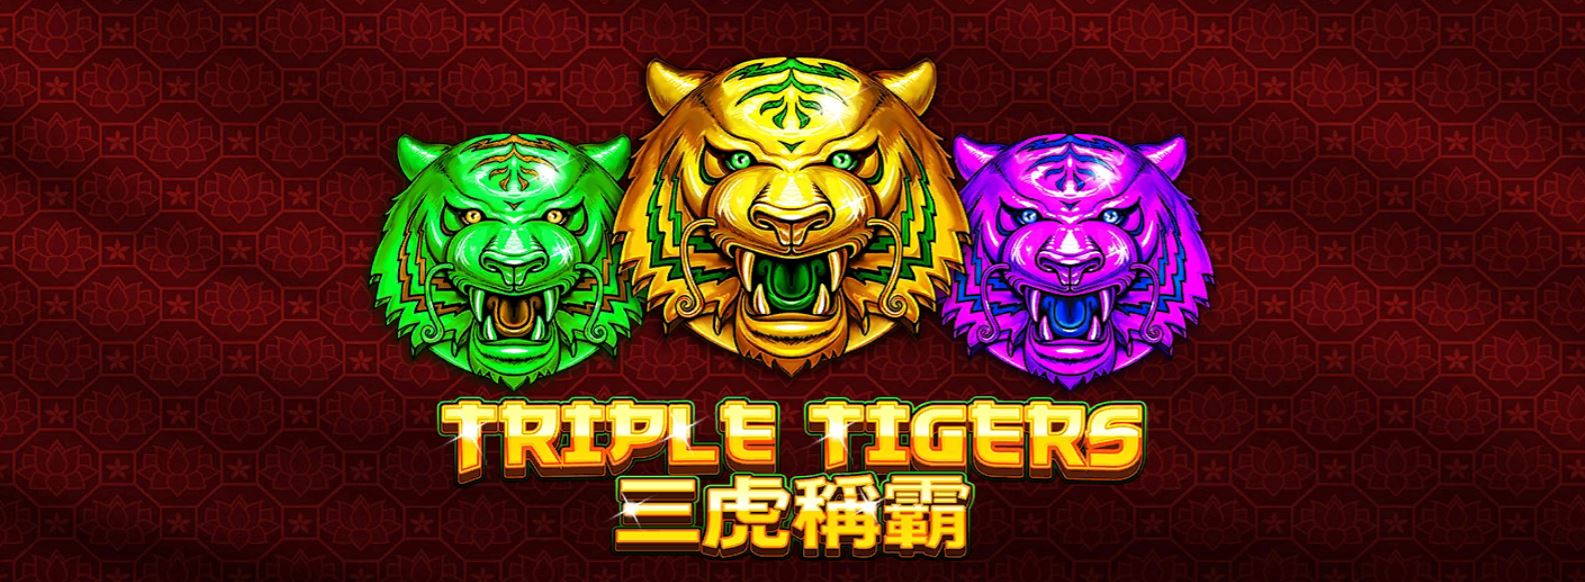 slotxo-triple tigers